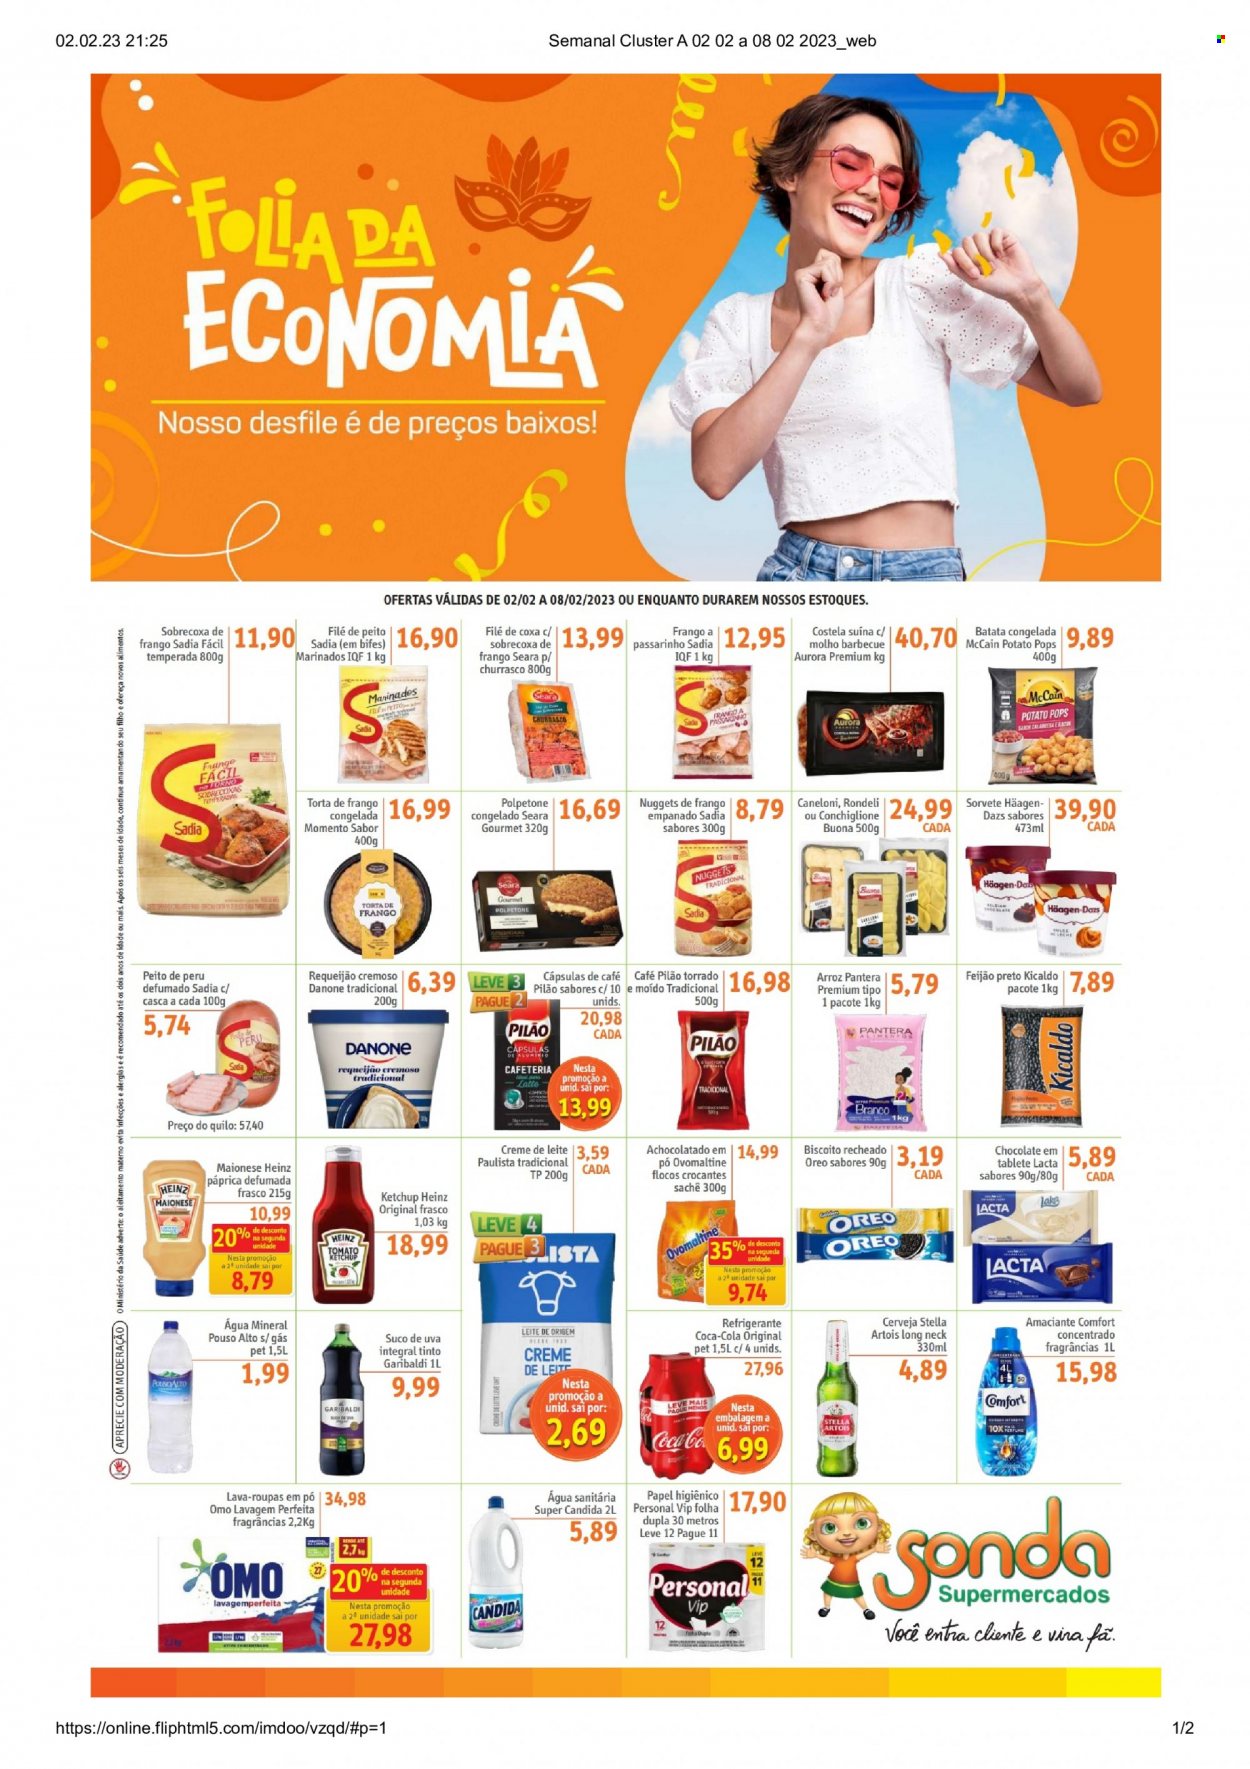 Encarte Sonda Supermercados  - 02.02.2023 - 08.02.2023.